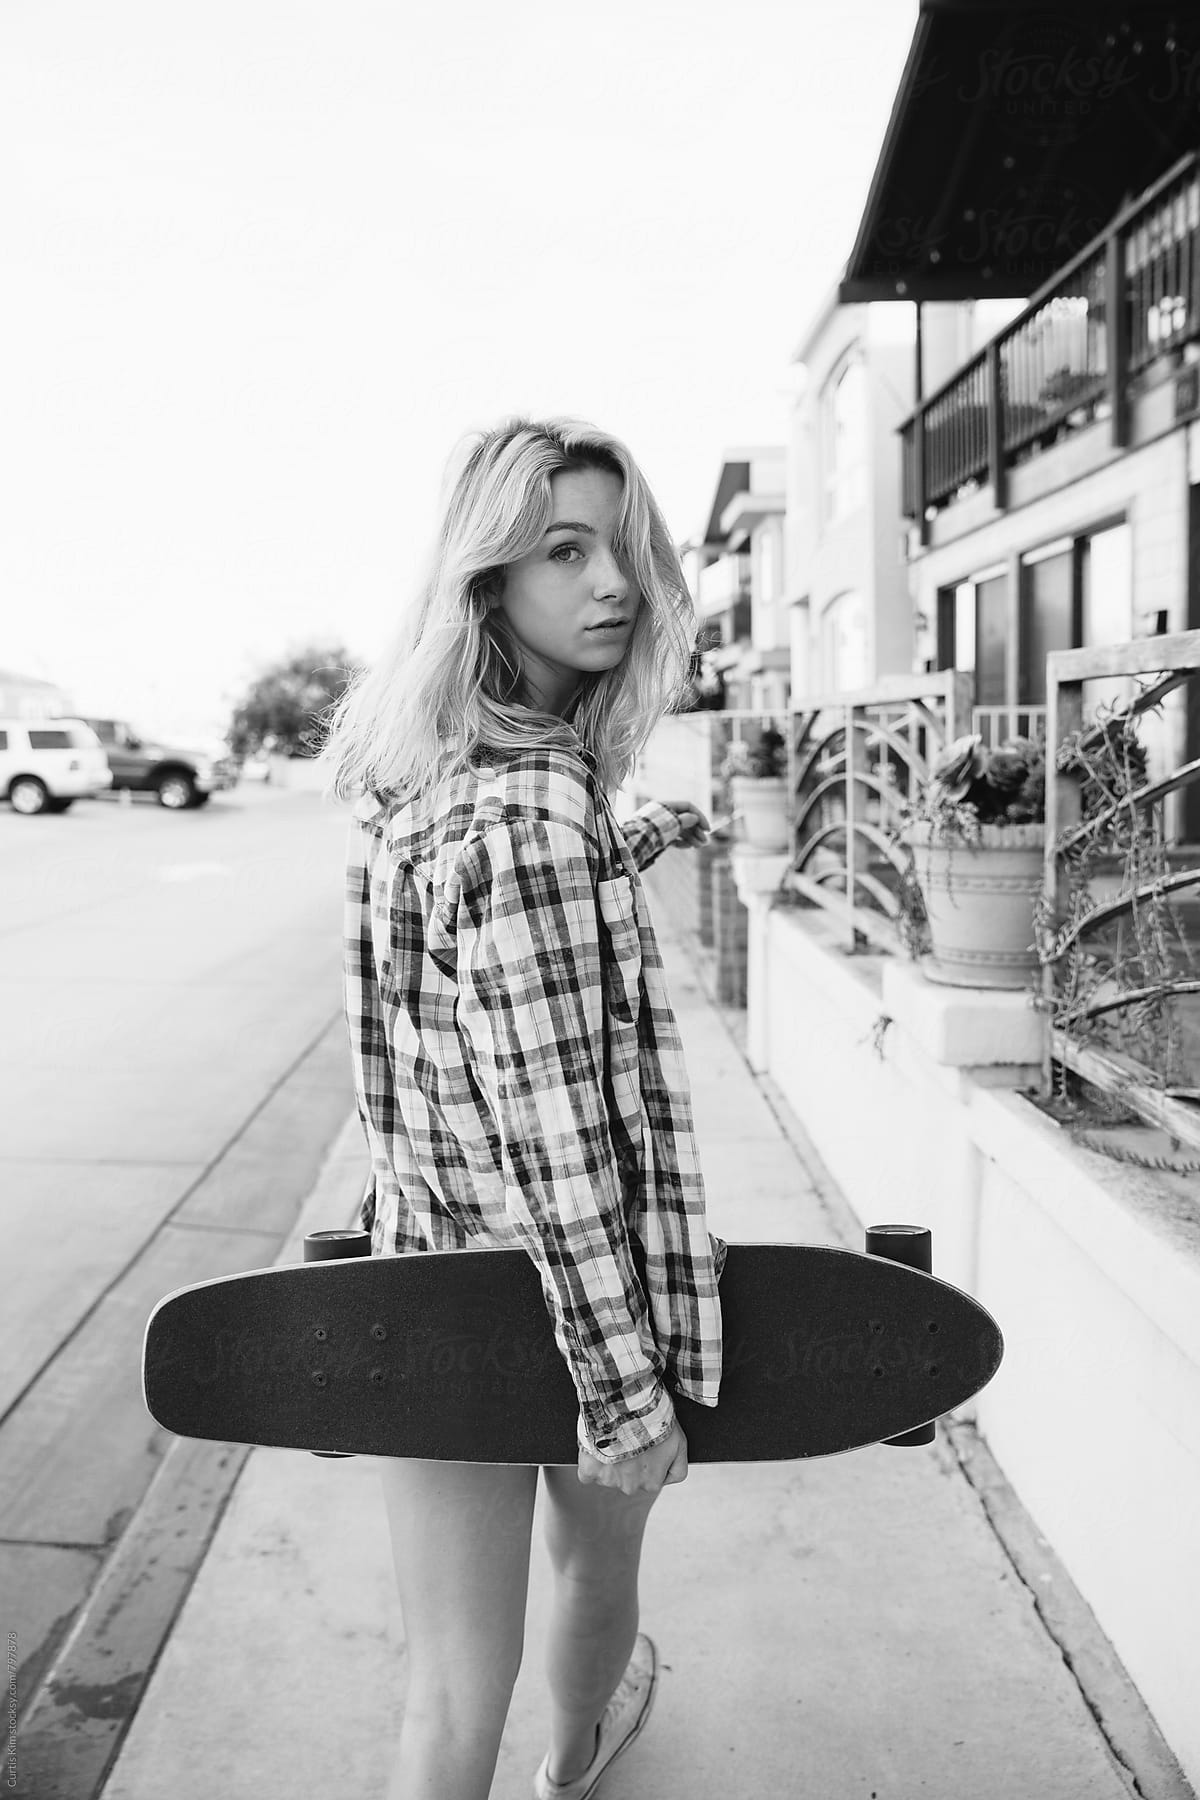 Blonde girl walking down sidewalk holding skateboard